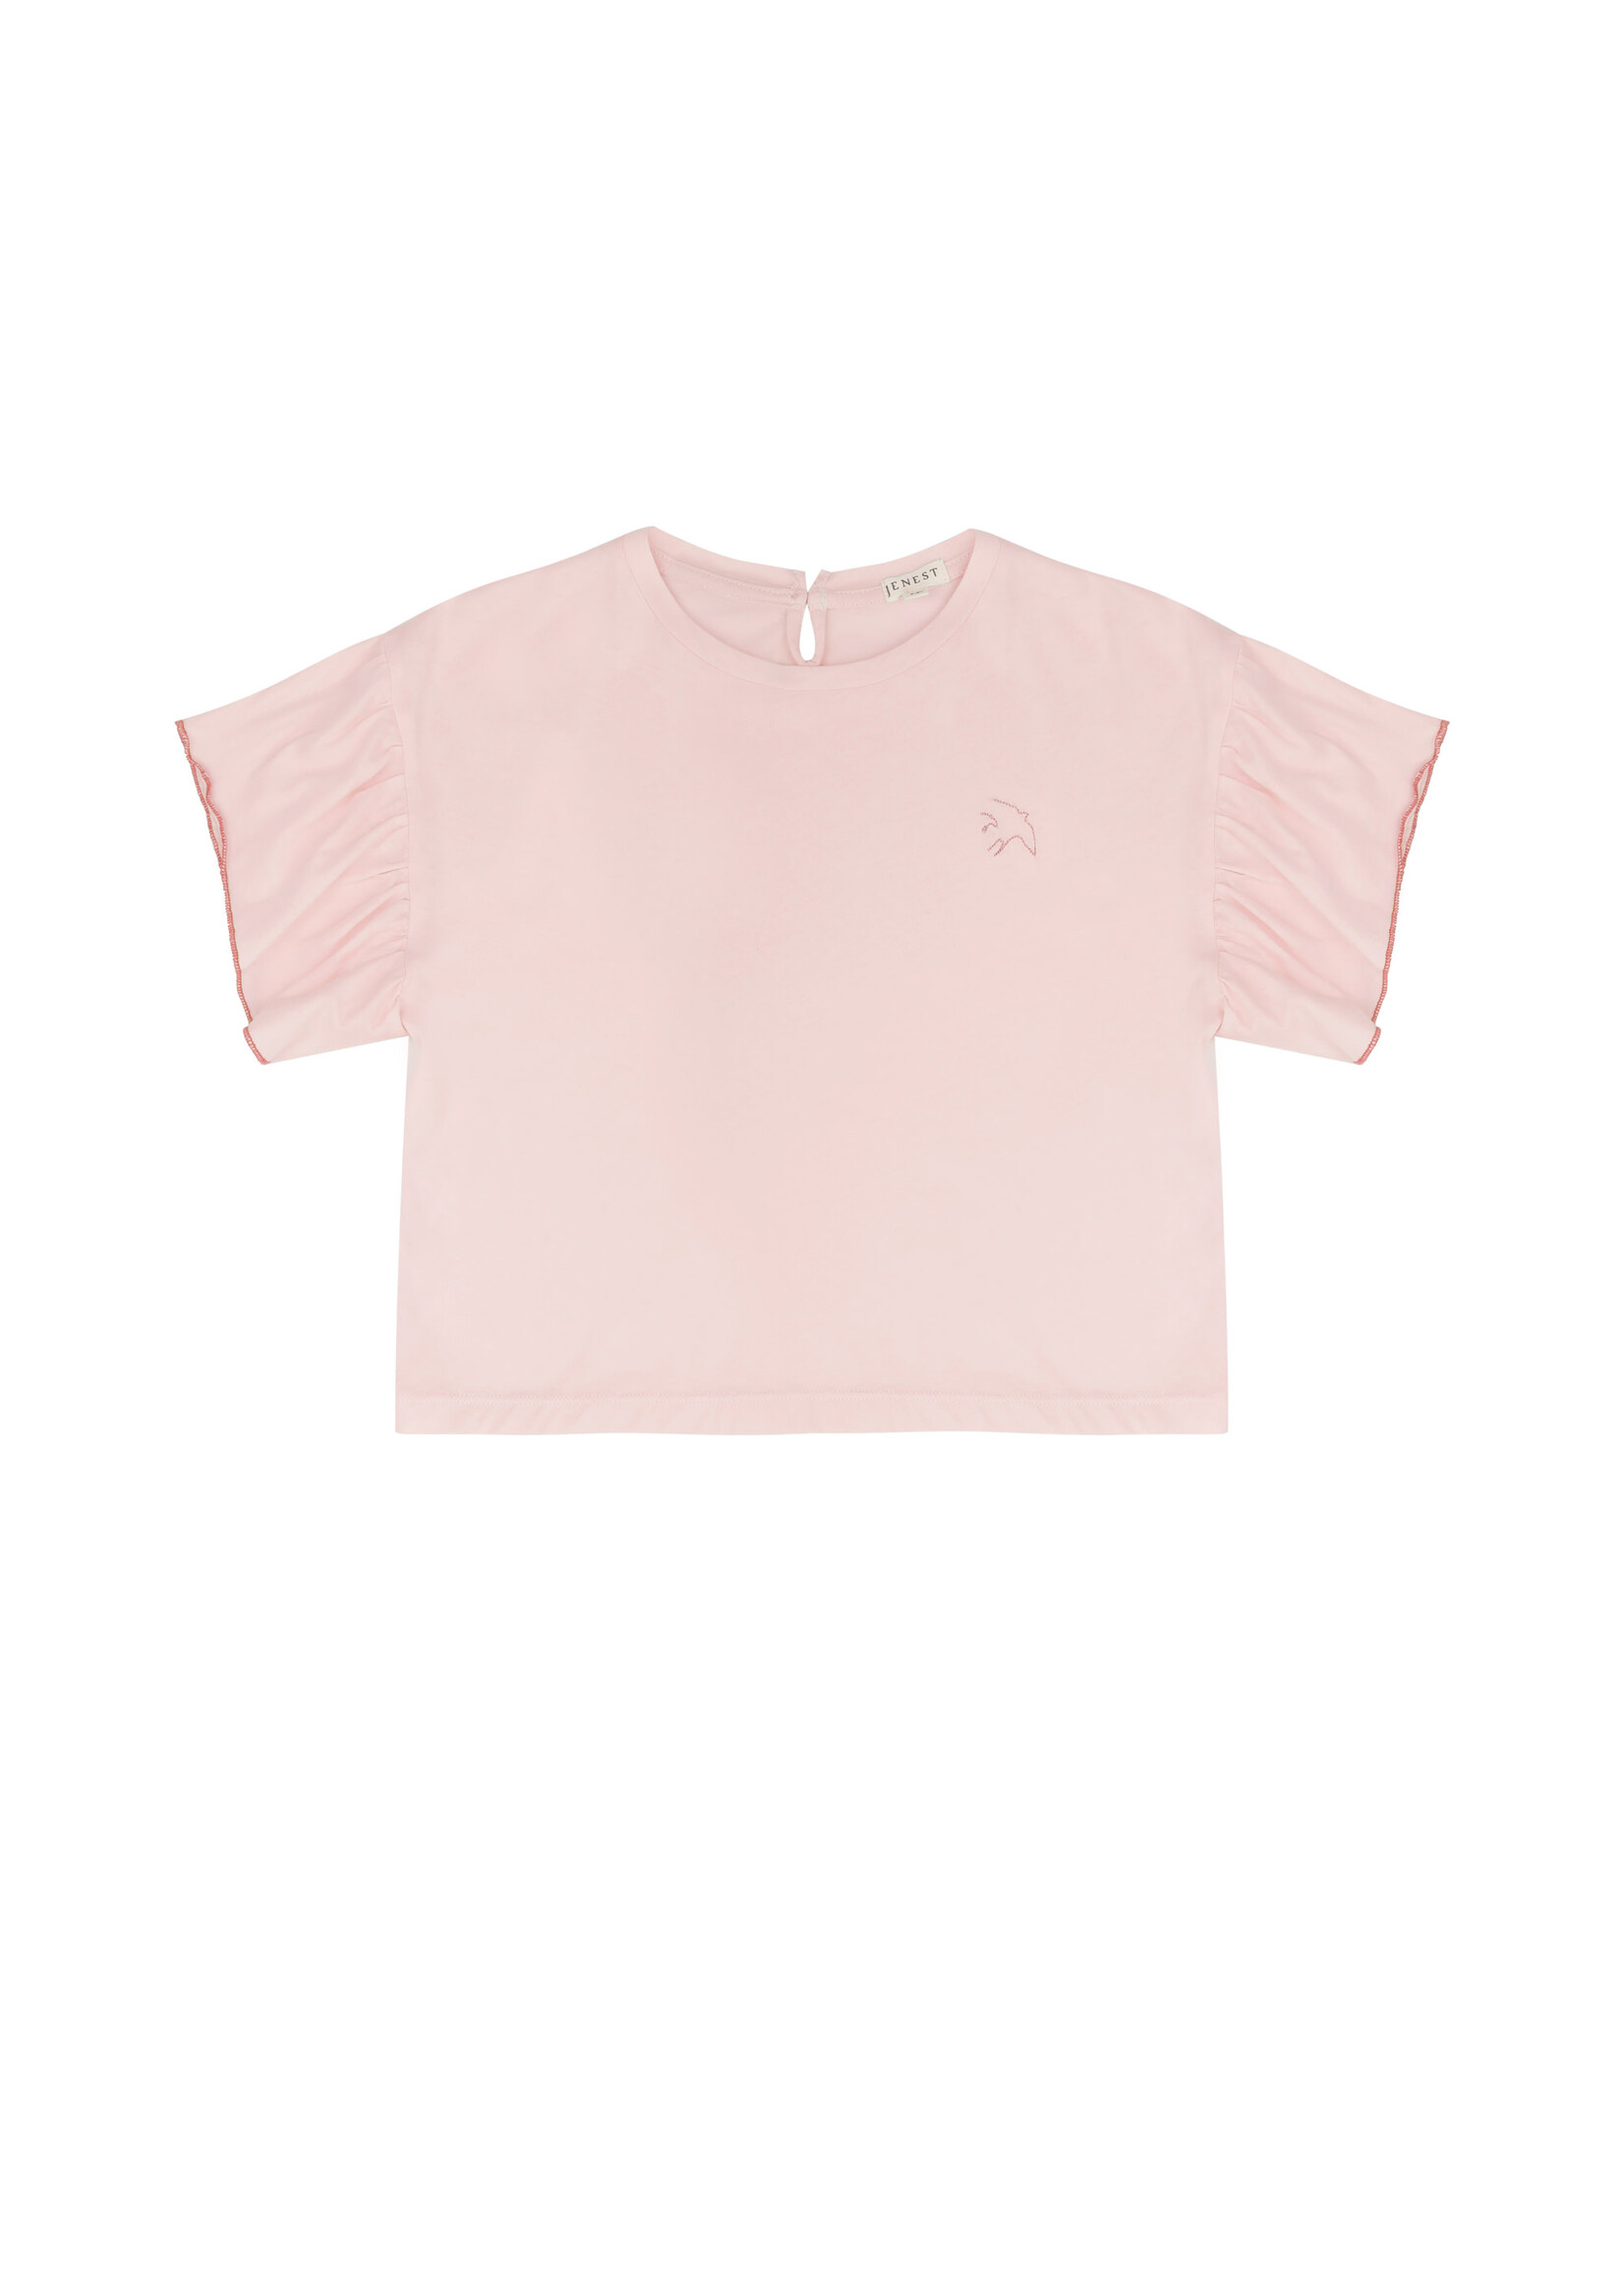 Jenest Jenest - Flutter Tshirt  Blossom Pink